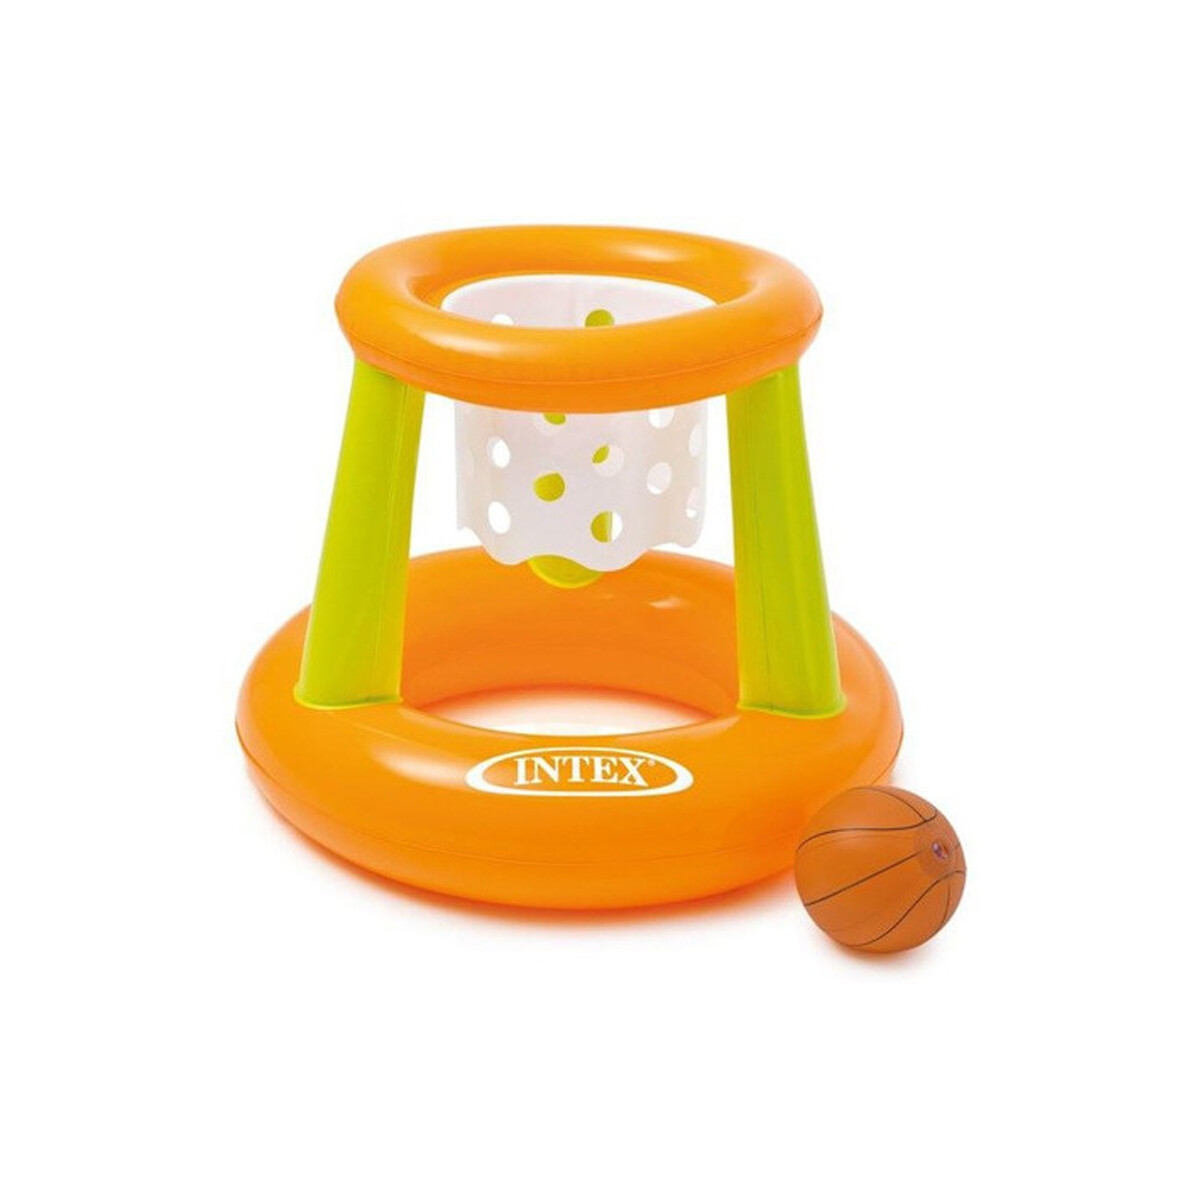 Isla Inflable Intex Aro Basket - Naranja/Verde 